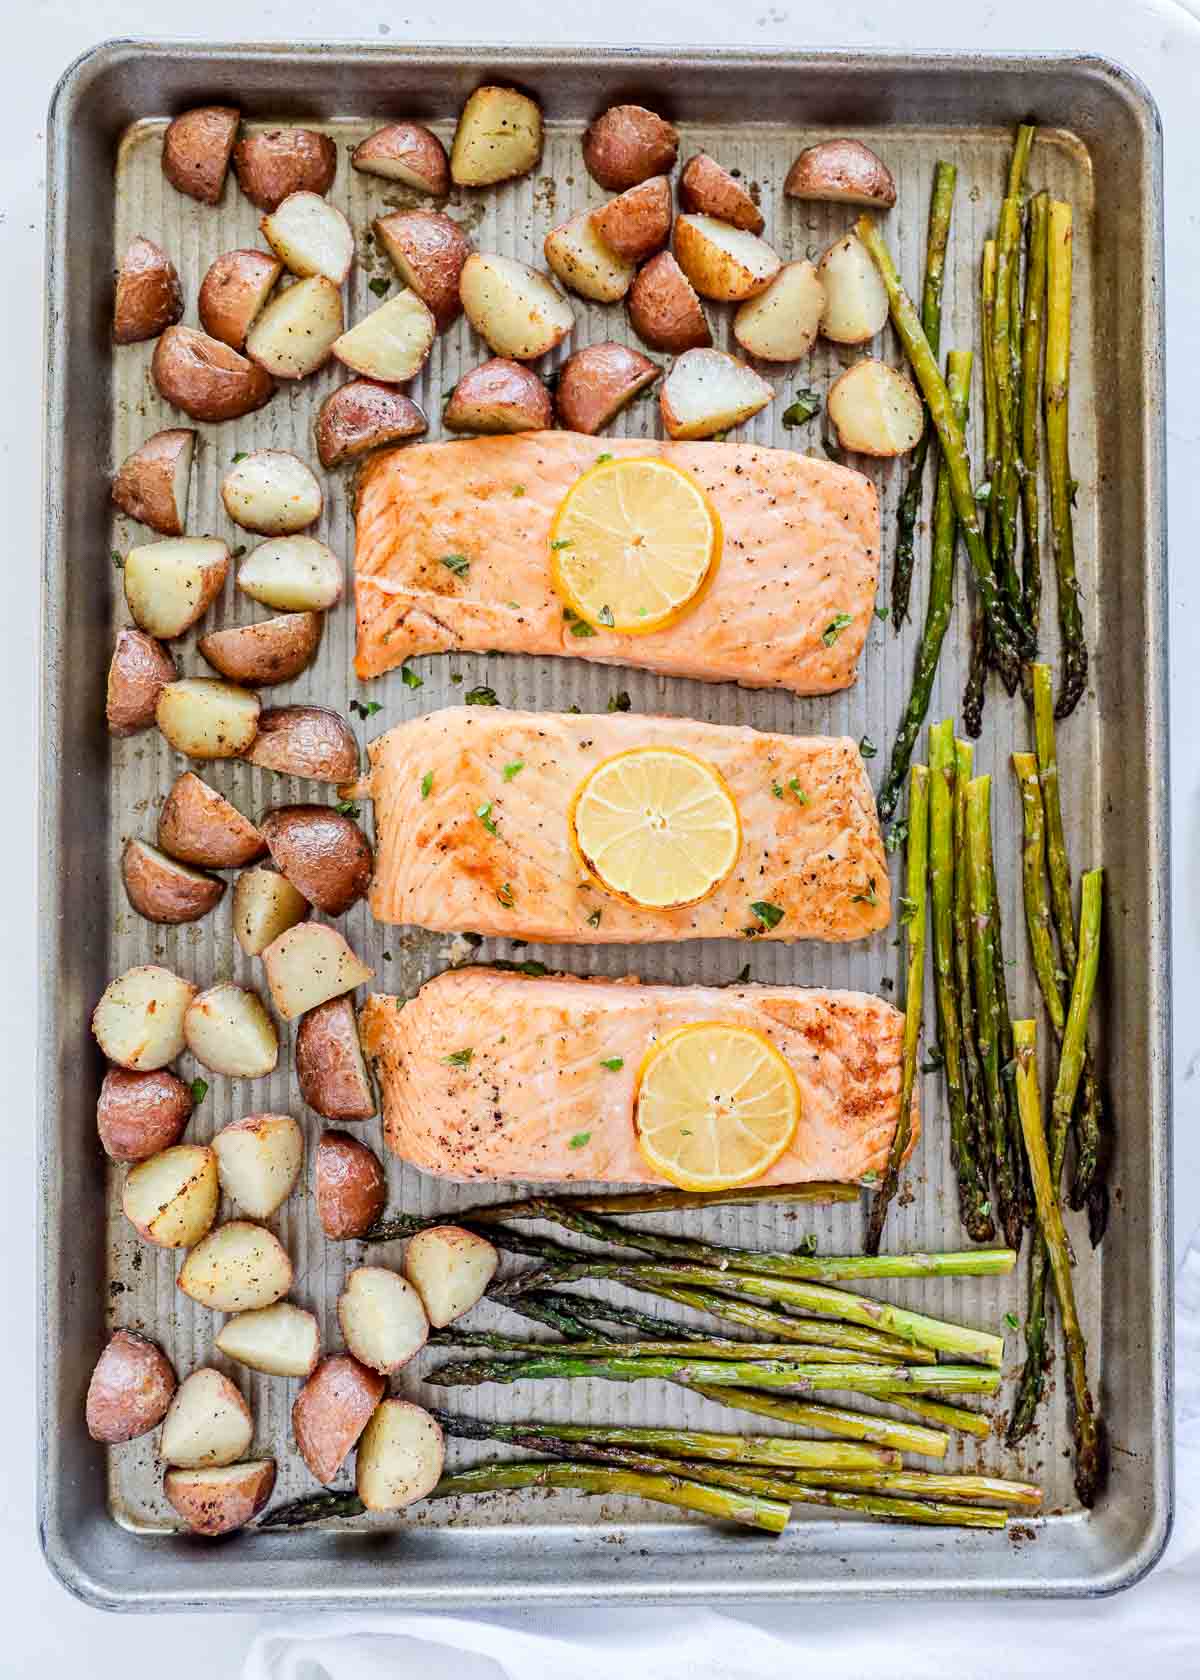 Salmon, potatoes and asparagus on sheet pan.